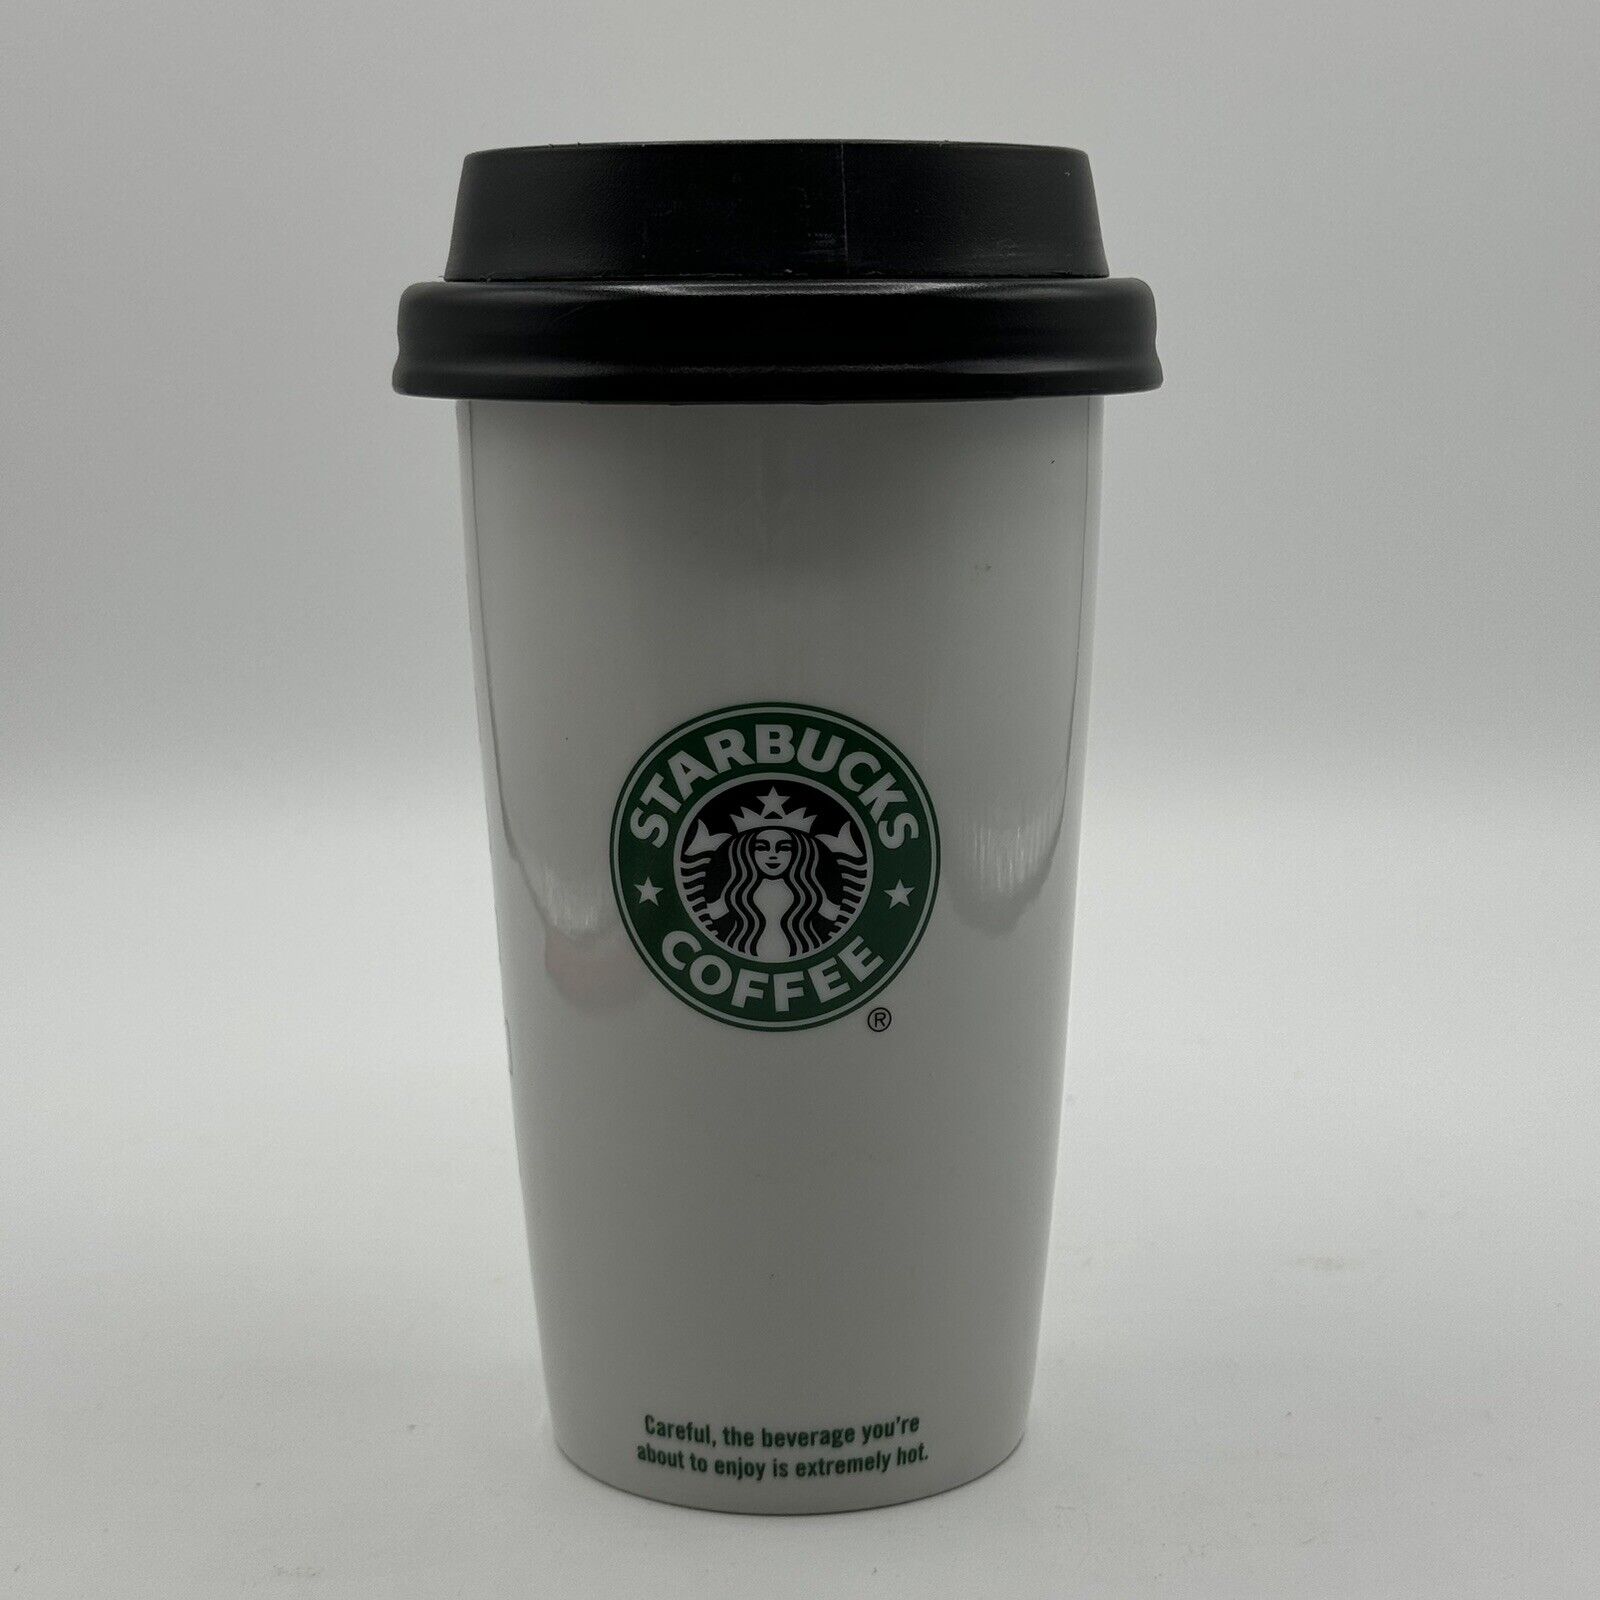 2009 Starbucks Coffee Old Logo Double Wall Ceramic Travel Cup Tumbler Mug 12 oz